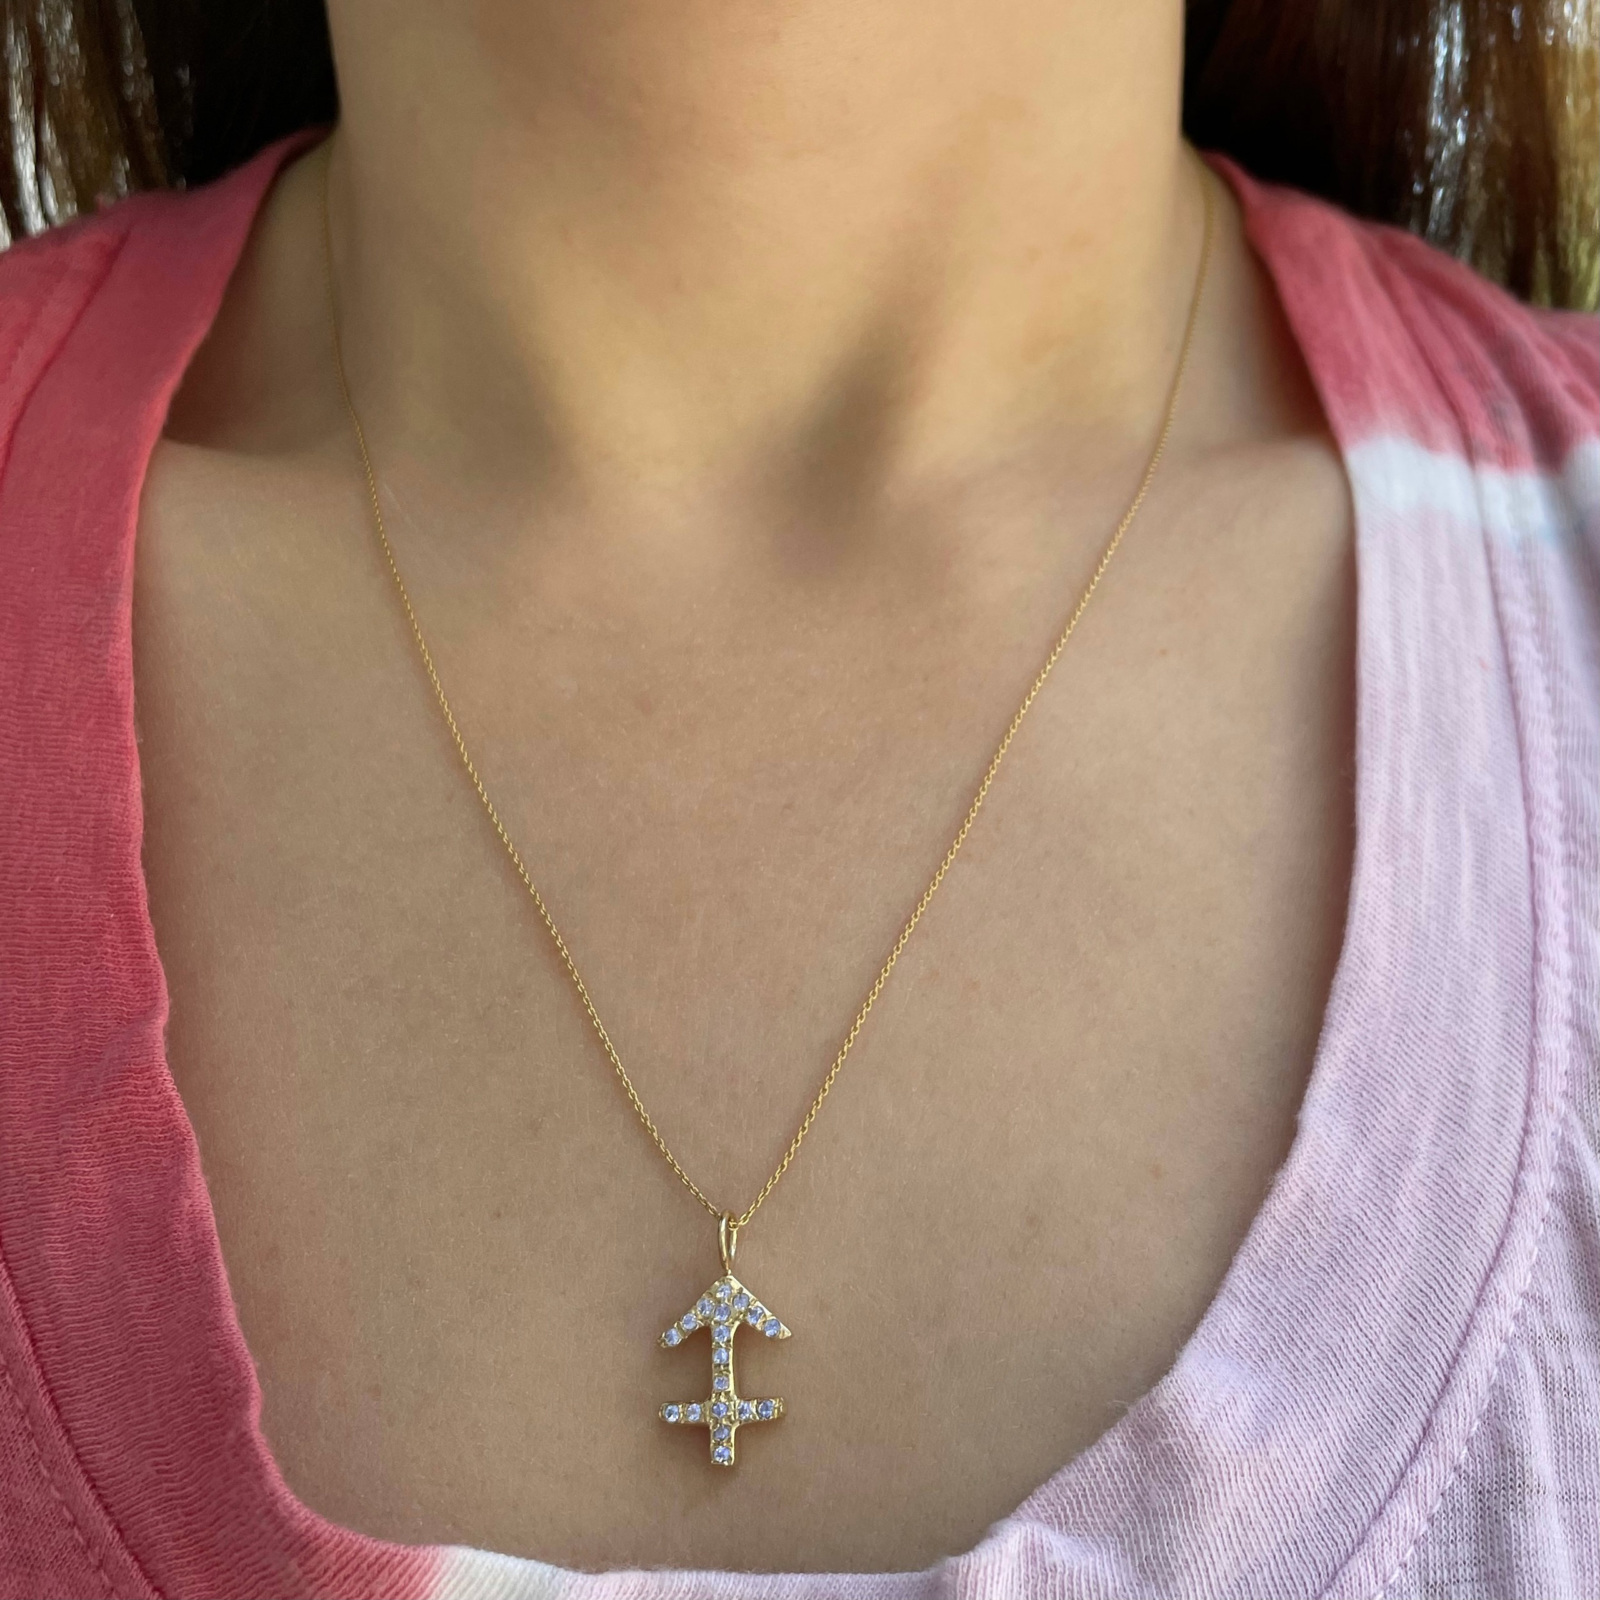 Sagittarius zodiac sign charm pendant necklace